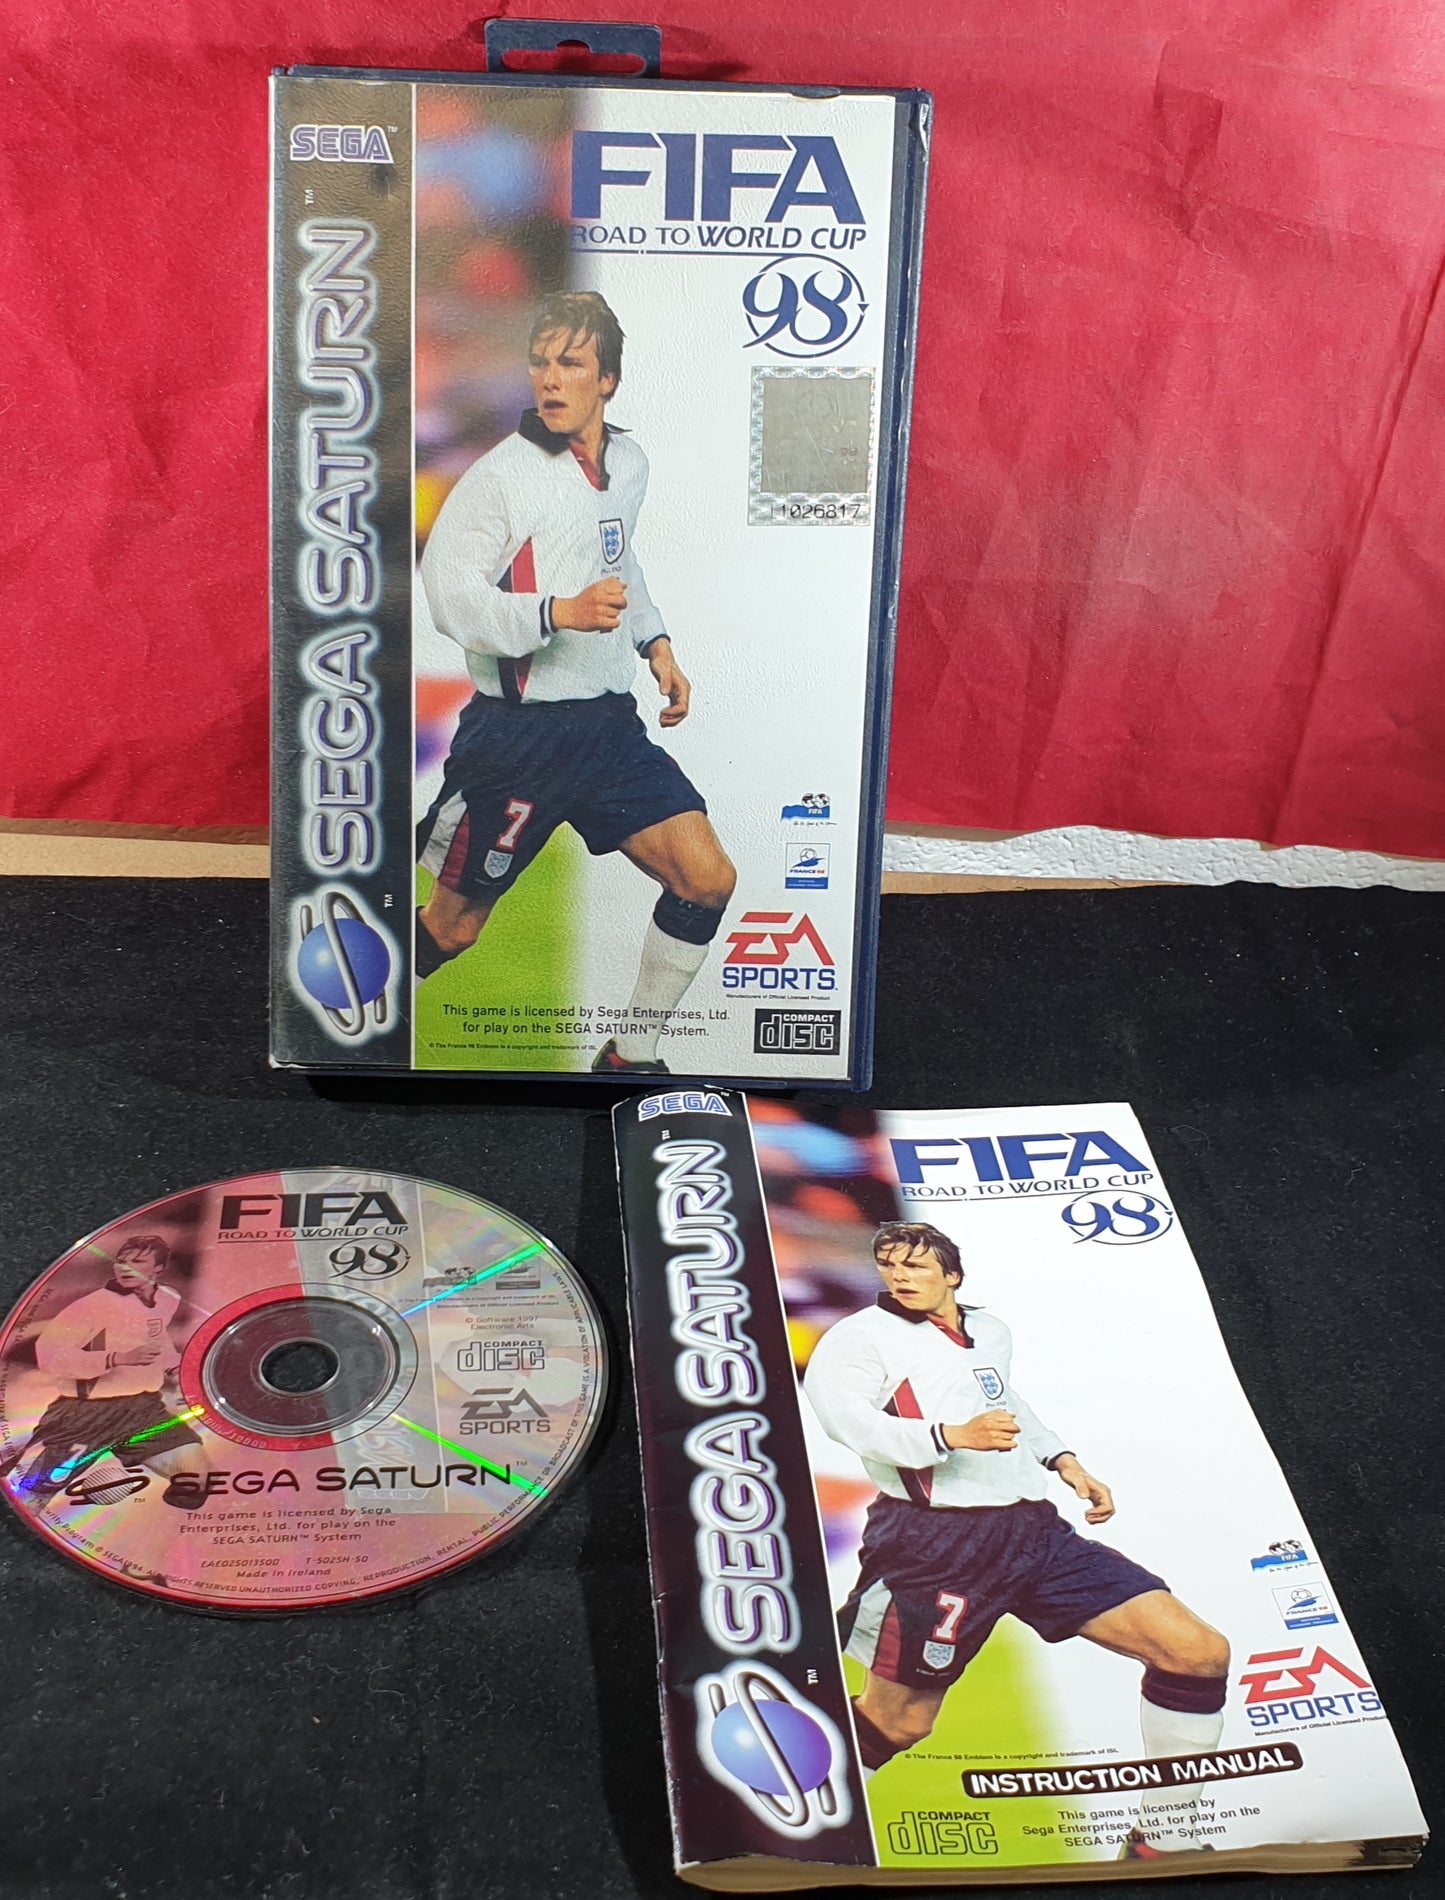 FIFA Road to World Cup 98 Sega Saturn Game